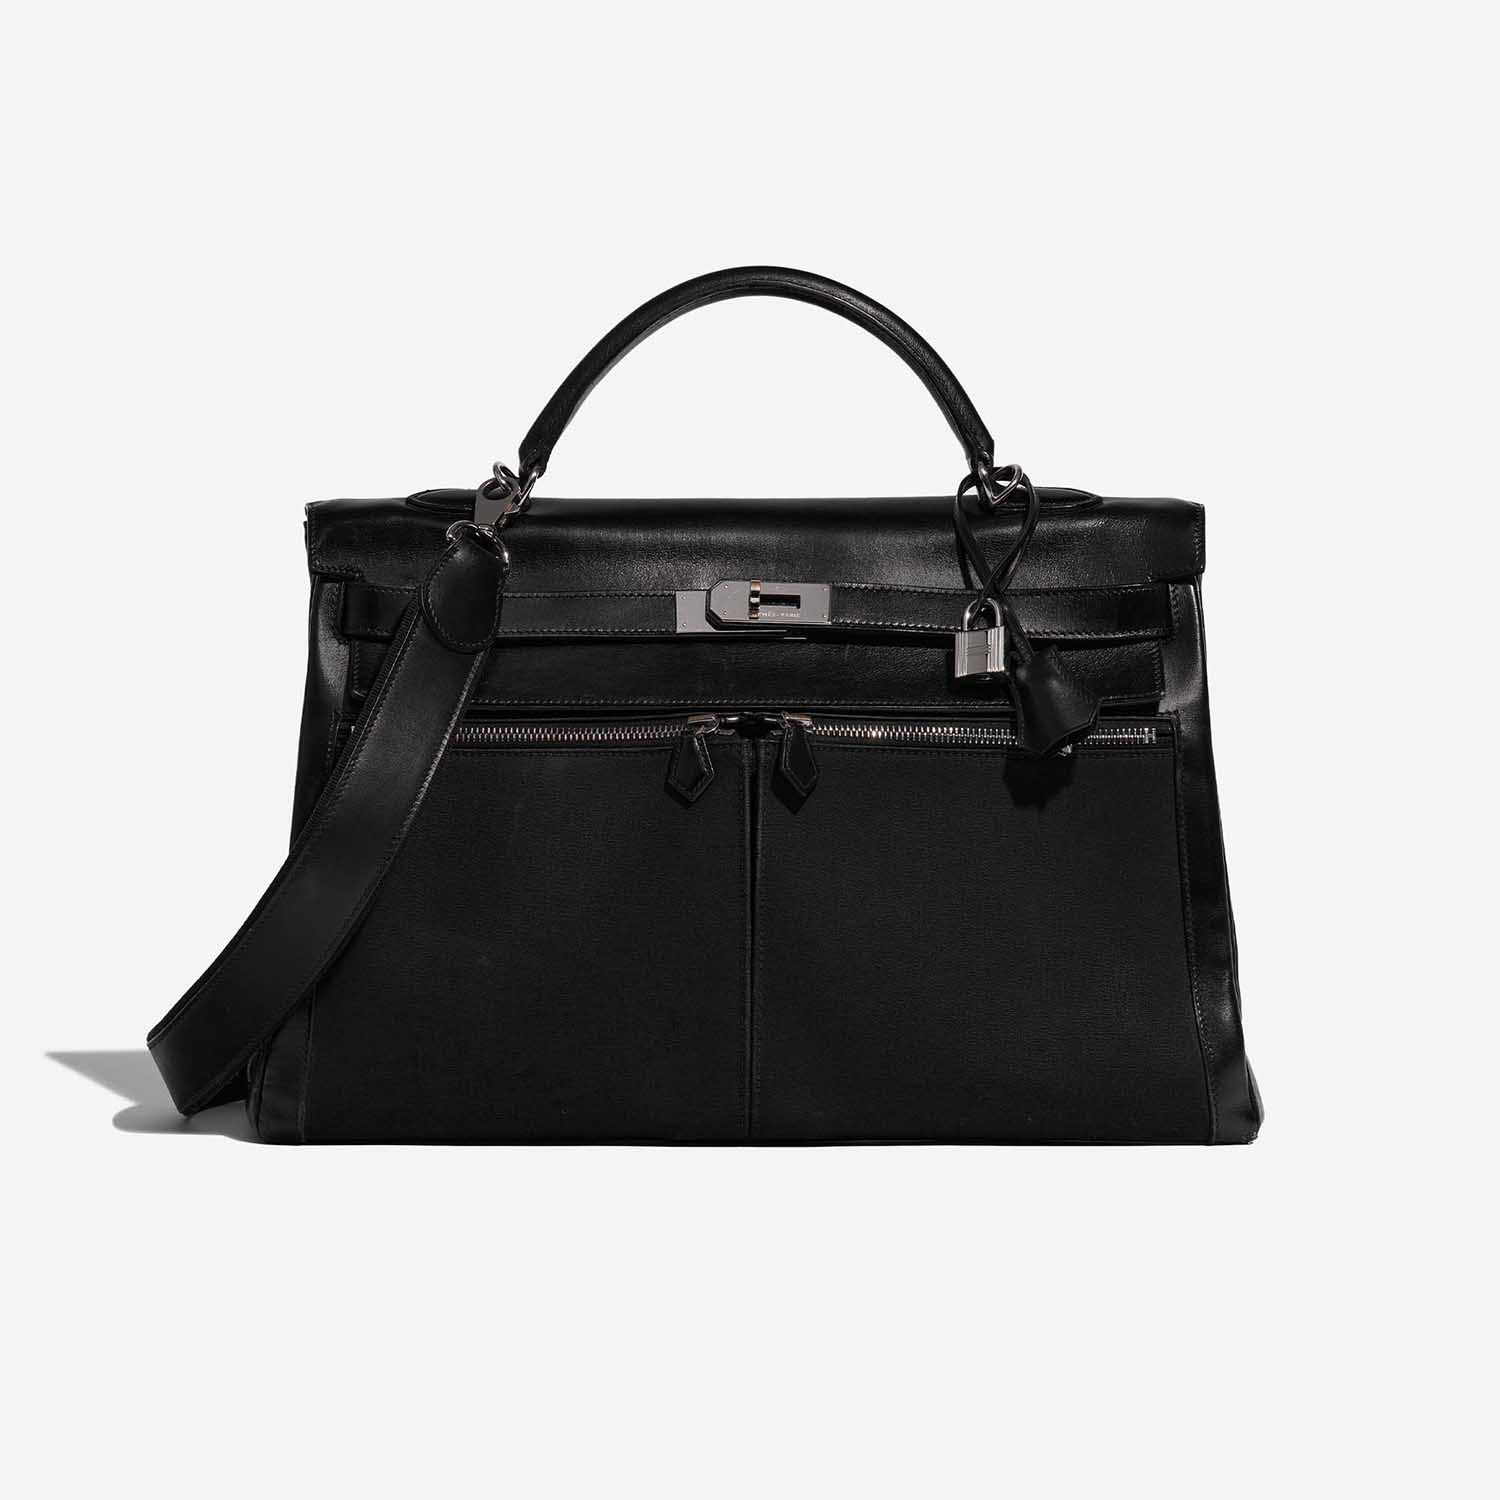 Pre-owned Hermès bag Kelly Lakis 40 Toile / Box Black Black Front | Sell your designer bag on Saclab.com